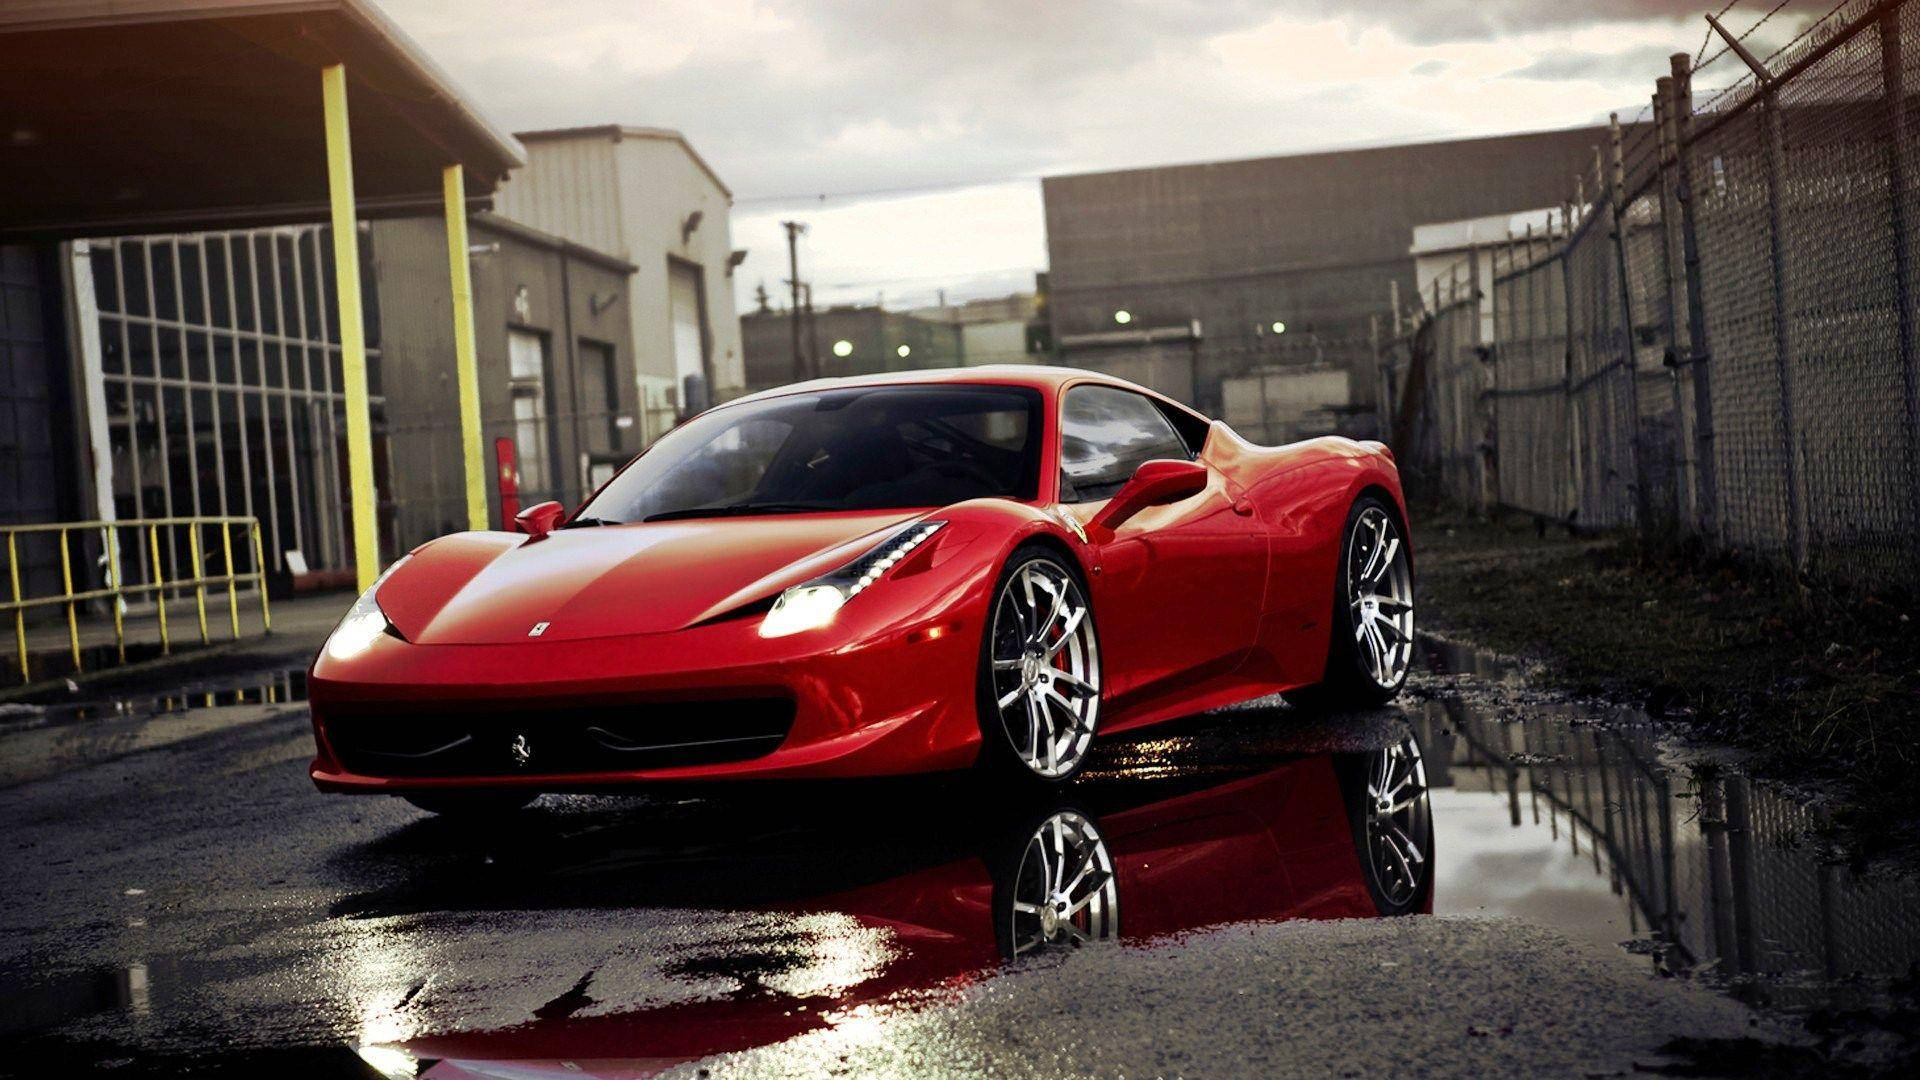 "Italian Luxury - A Classic Red Ferrari" Wallpaper